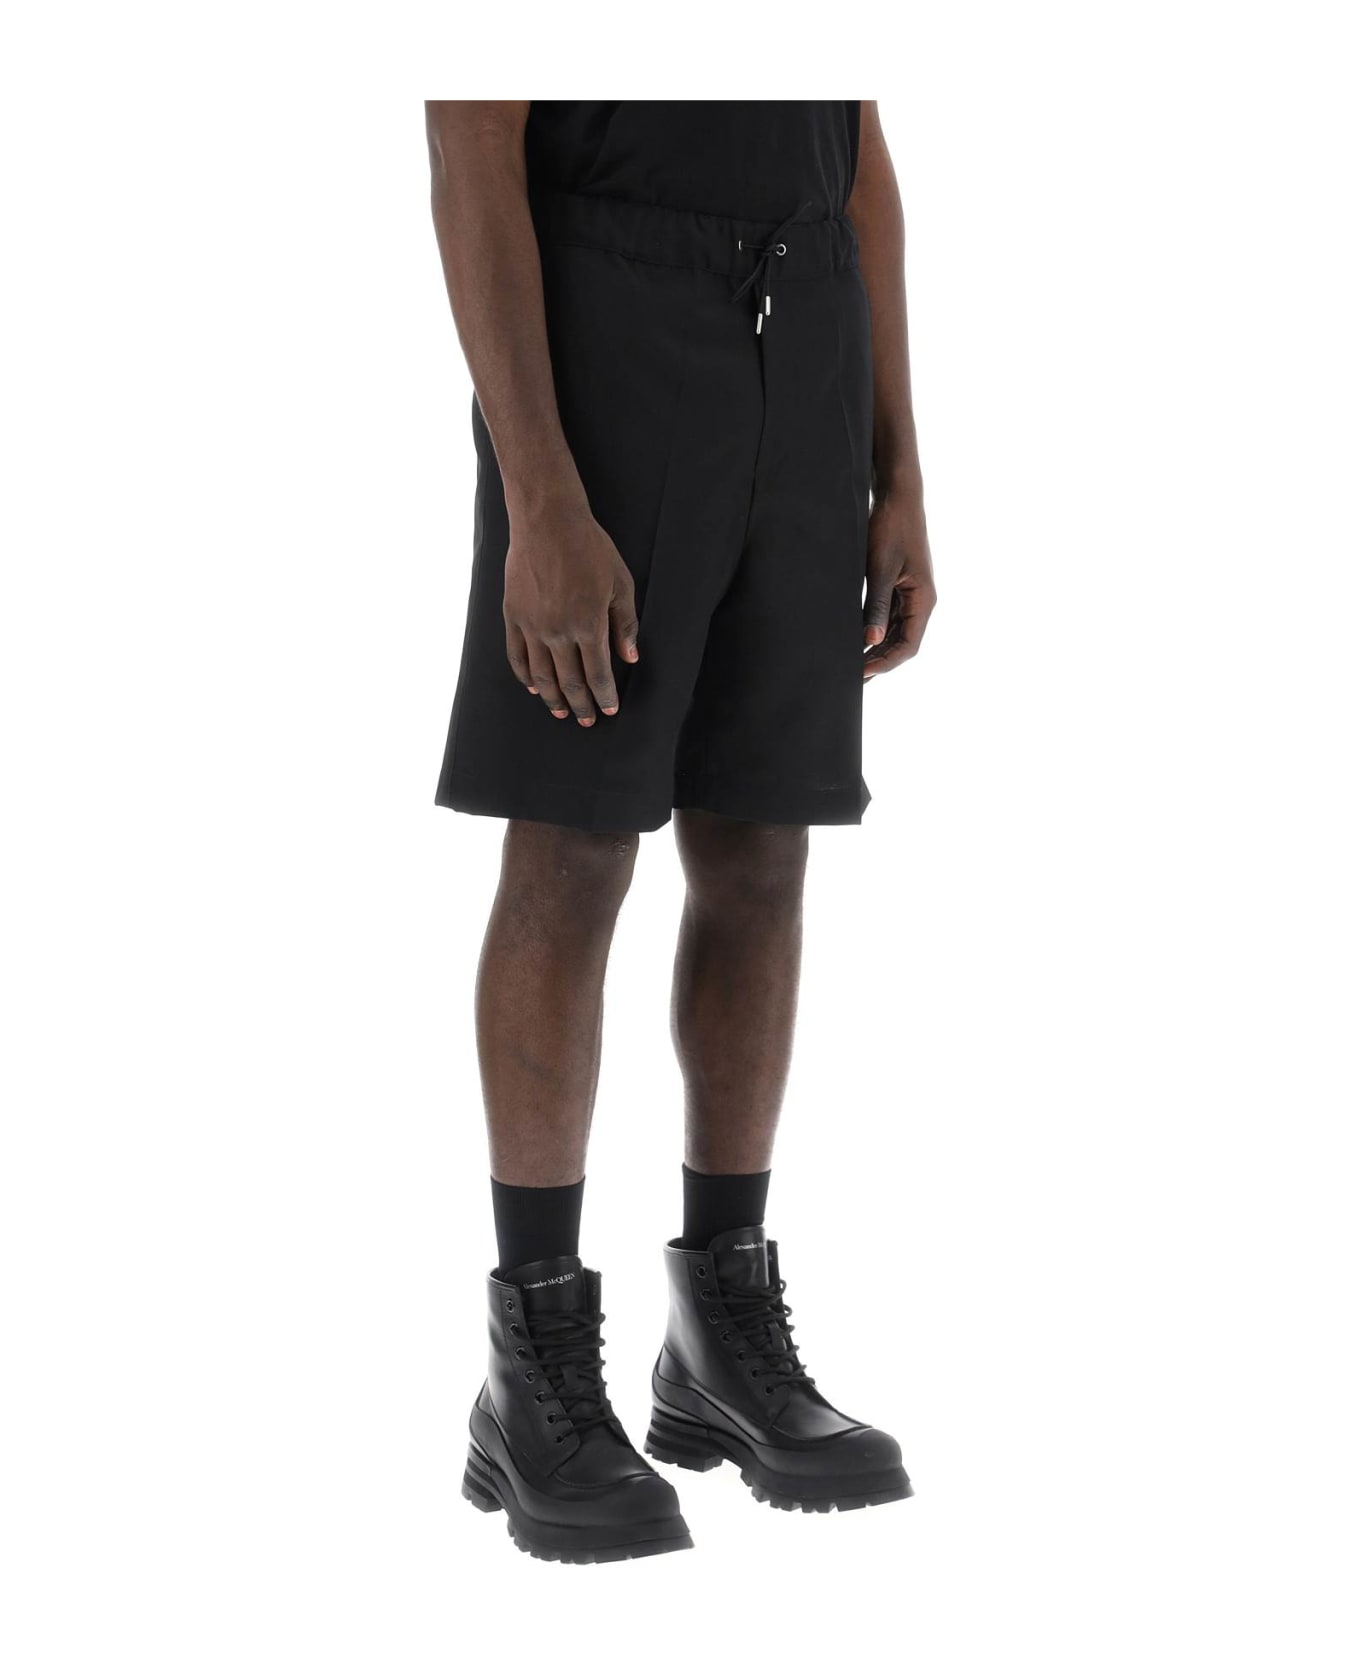 OAMC Shorts With Elasticated Waistband - Black